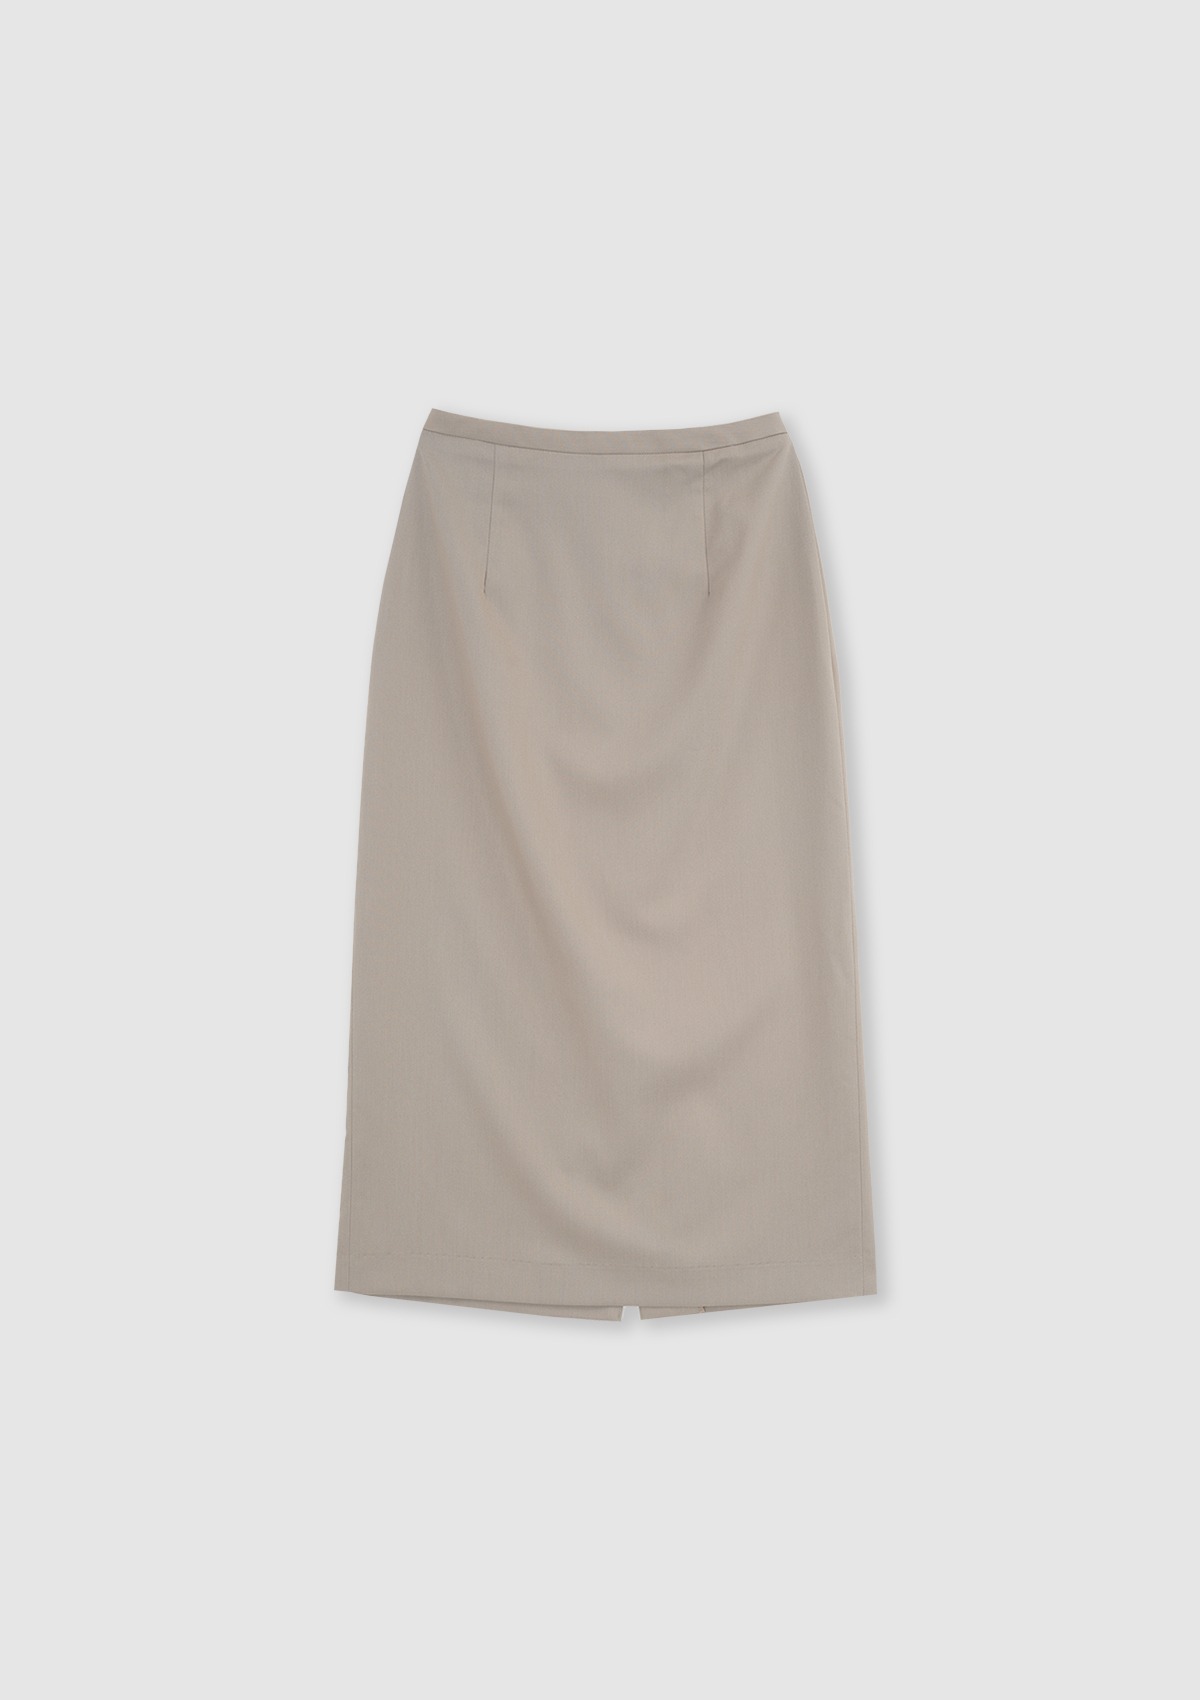 Bun Skirt (Beige)